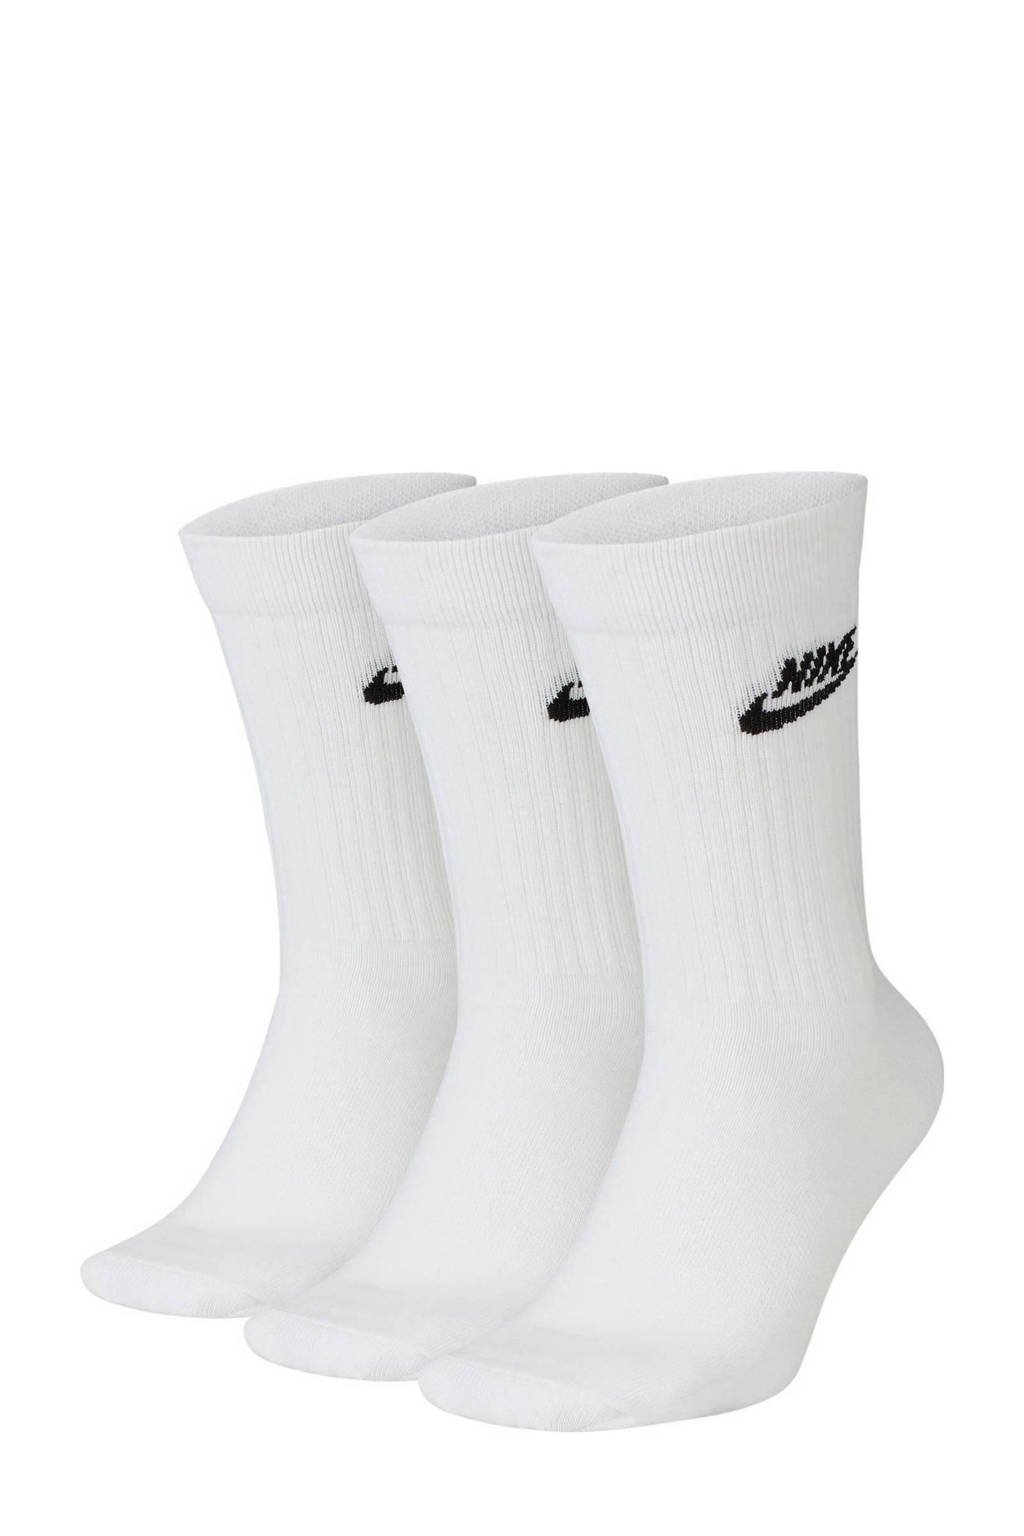 Abundancia Preludio cazar Nike sokken Everyday Essential - set van 3 wit | wehkamp